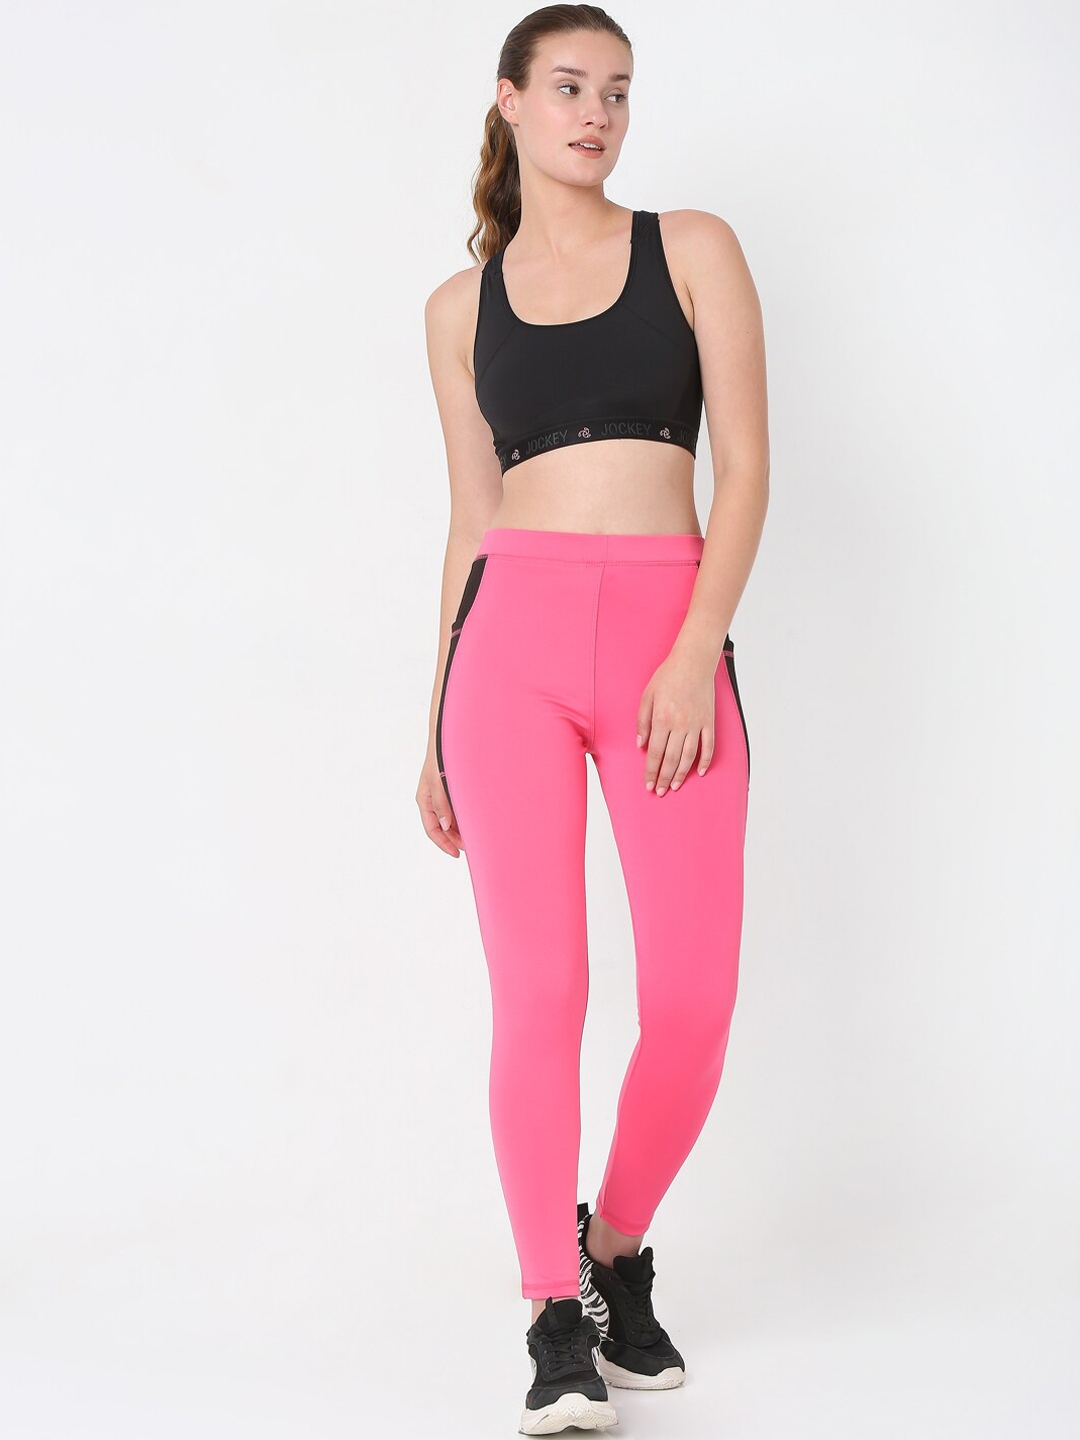 Smarty Pants Women Pink & Black Printed Slim-Fit Tights